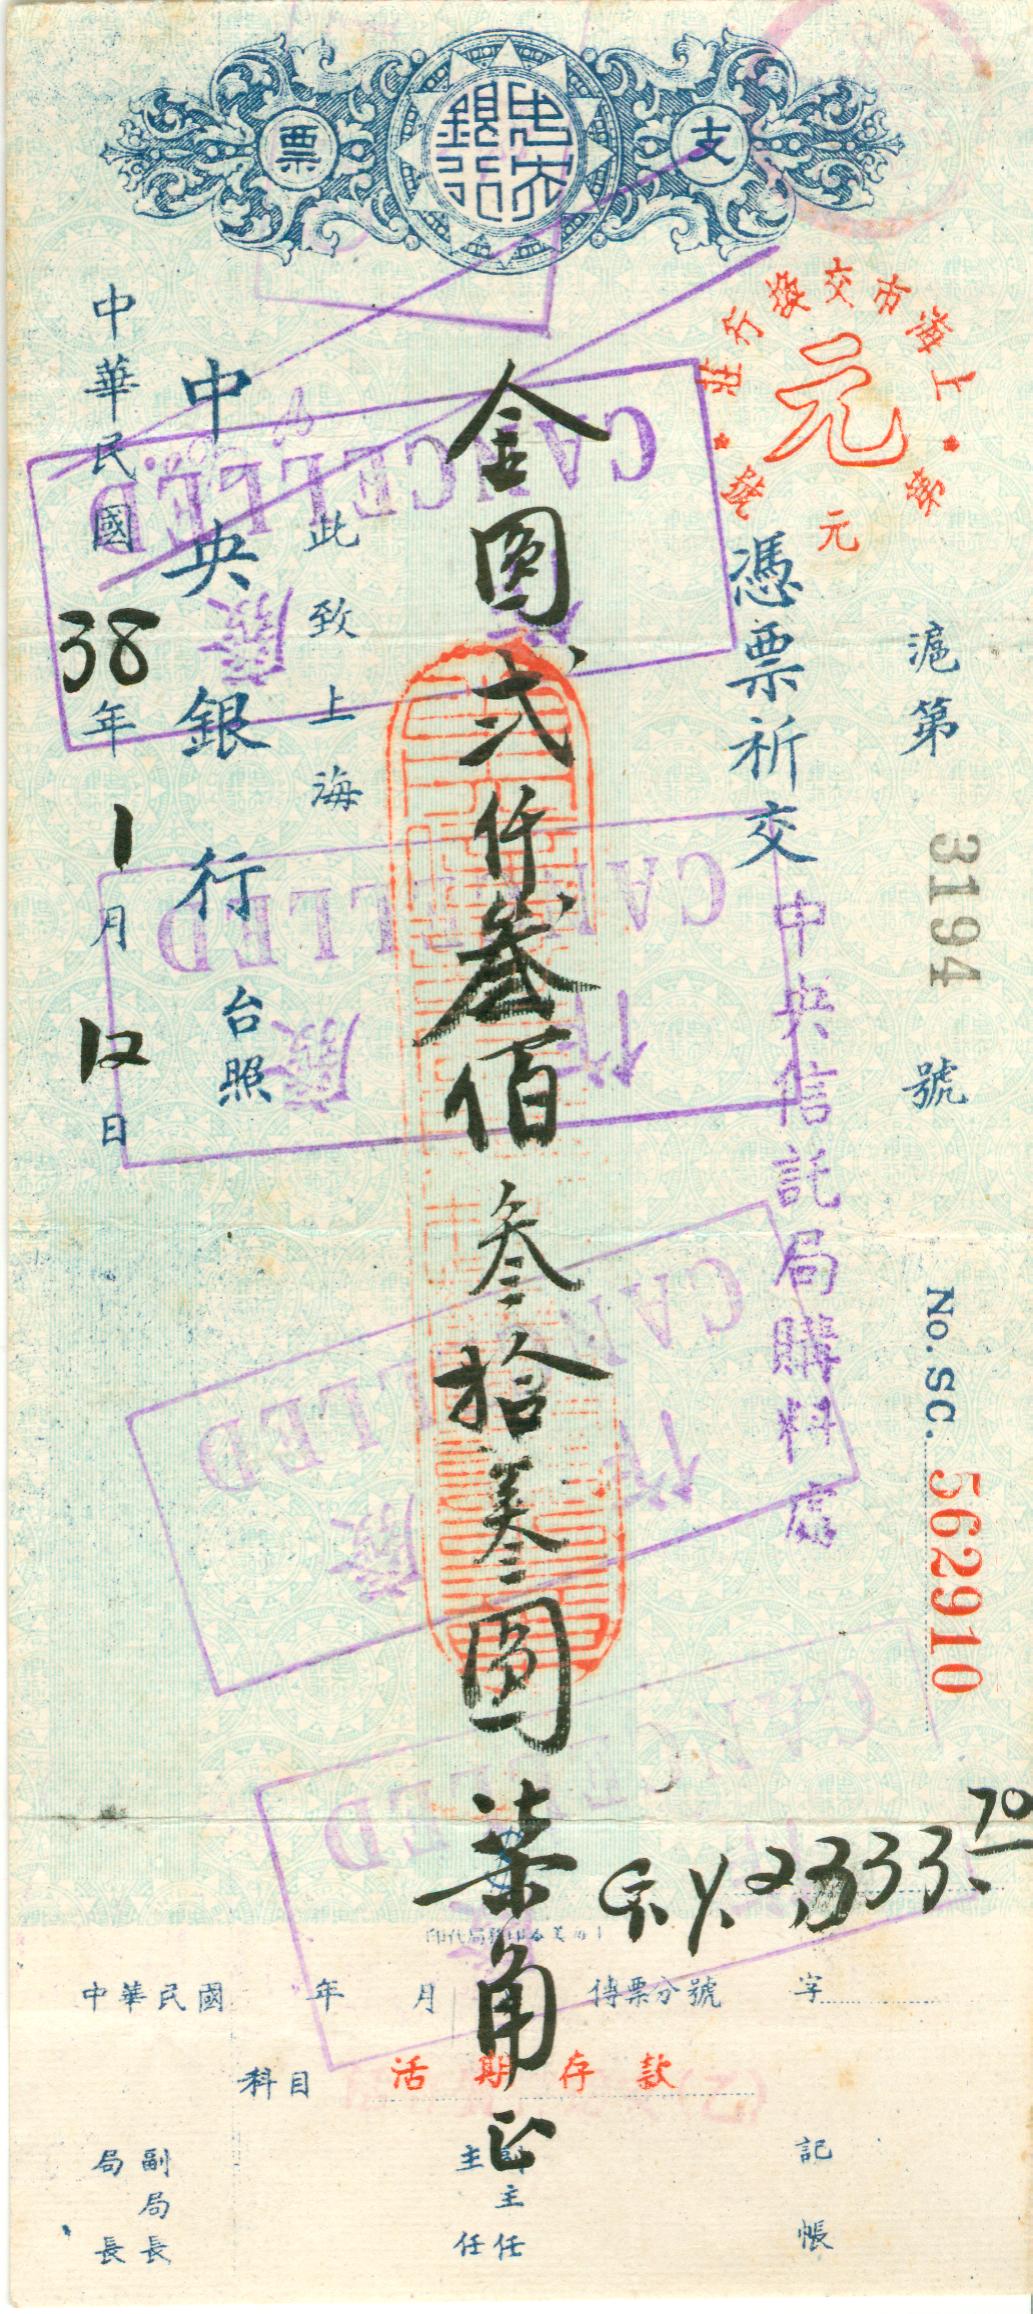 D1040, Cnetral Bank of China, Check of 1949